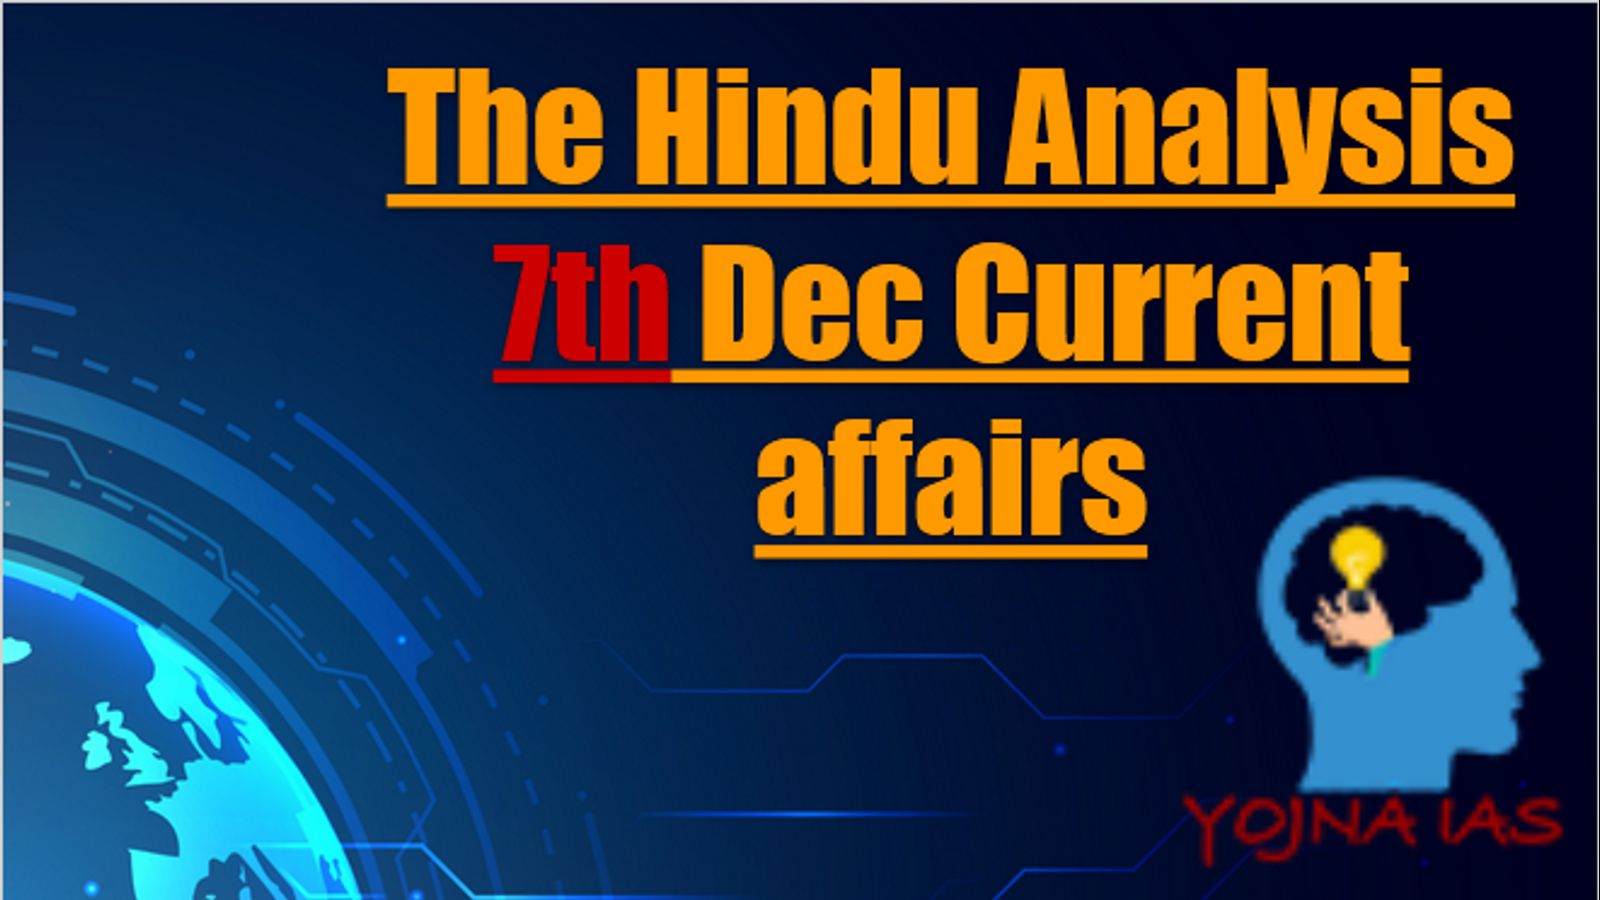 The Hindu Analysis 7th December